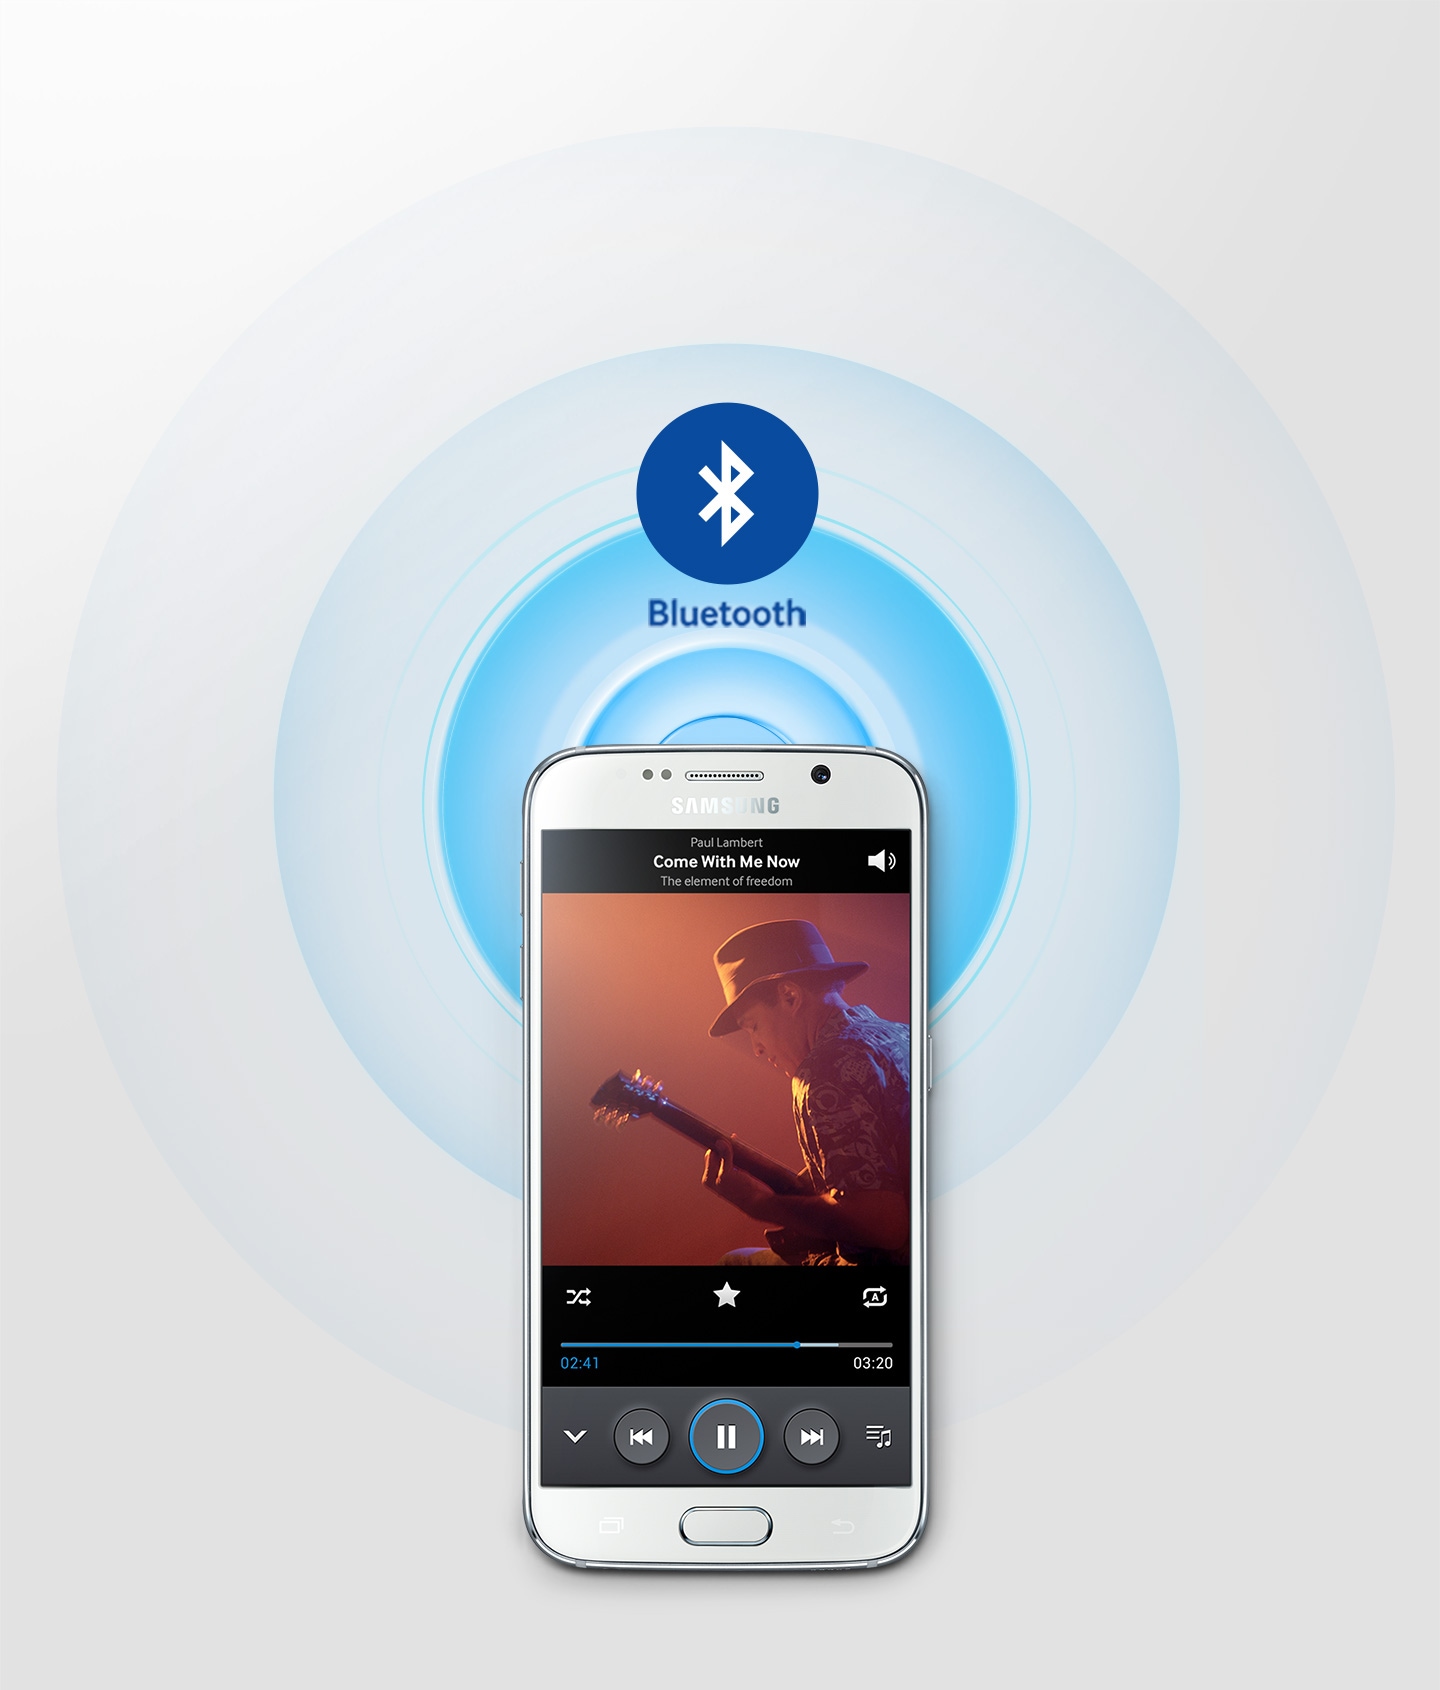 Music streaming service via Bluetooth